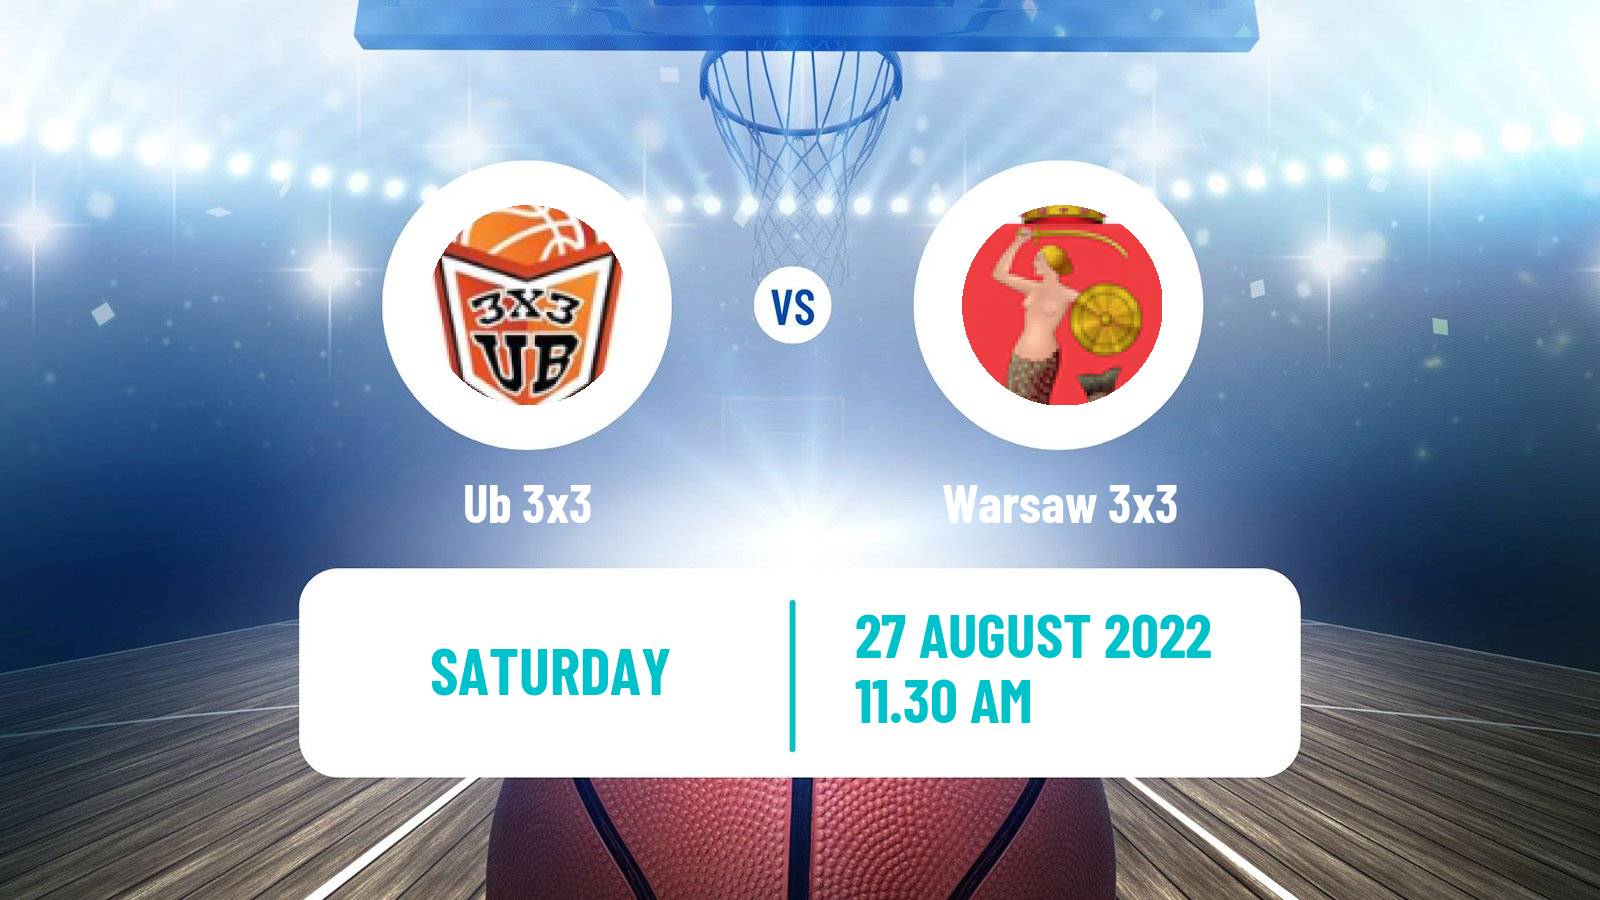 Basketball World Tour Debrecen 3x3 Ub 3x3 - Warsaw 3x3